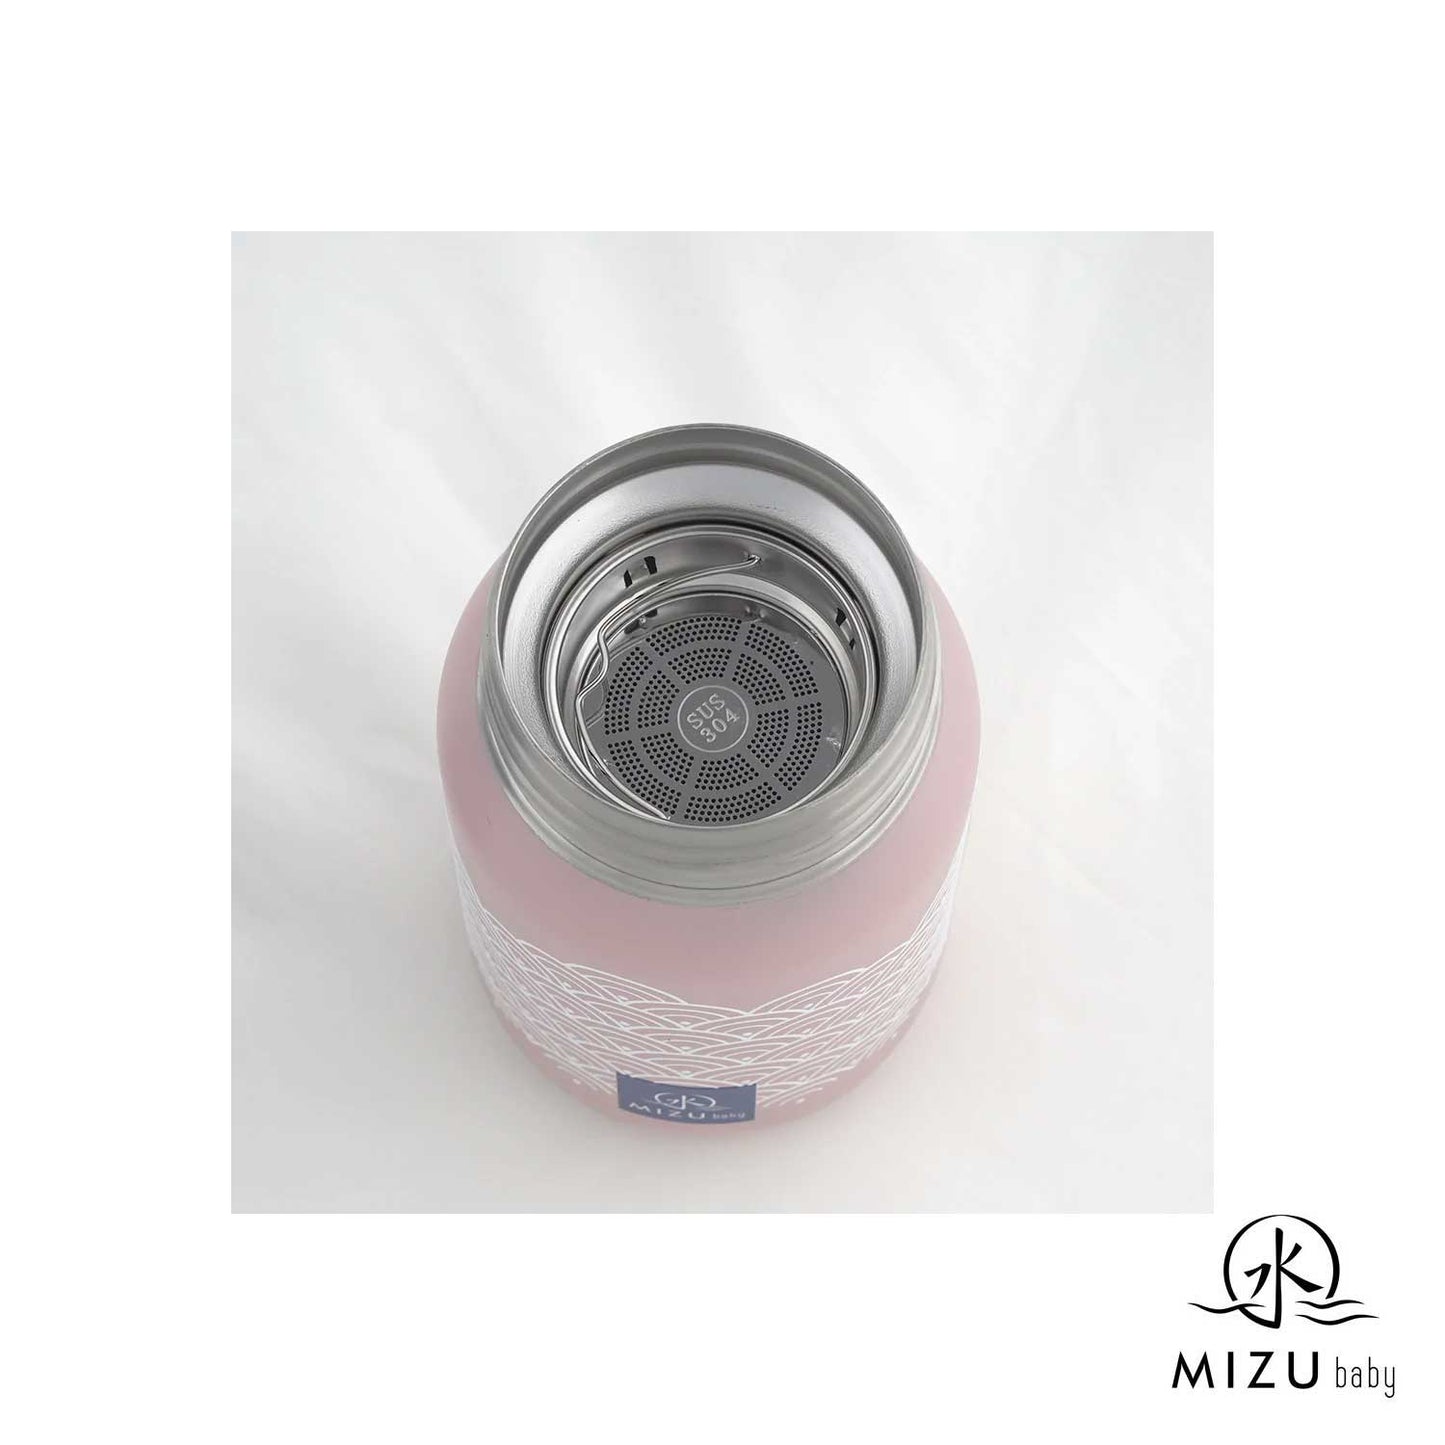 Mizu - Yume Fun Thermos 300ml for baby food and liquids